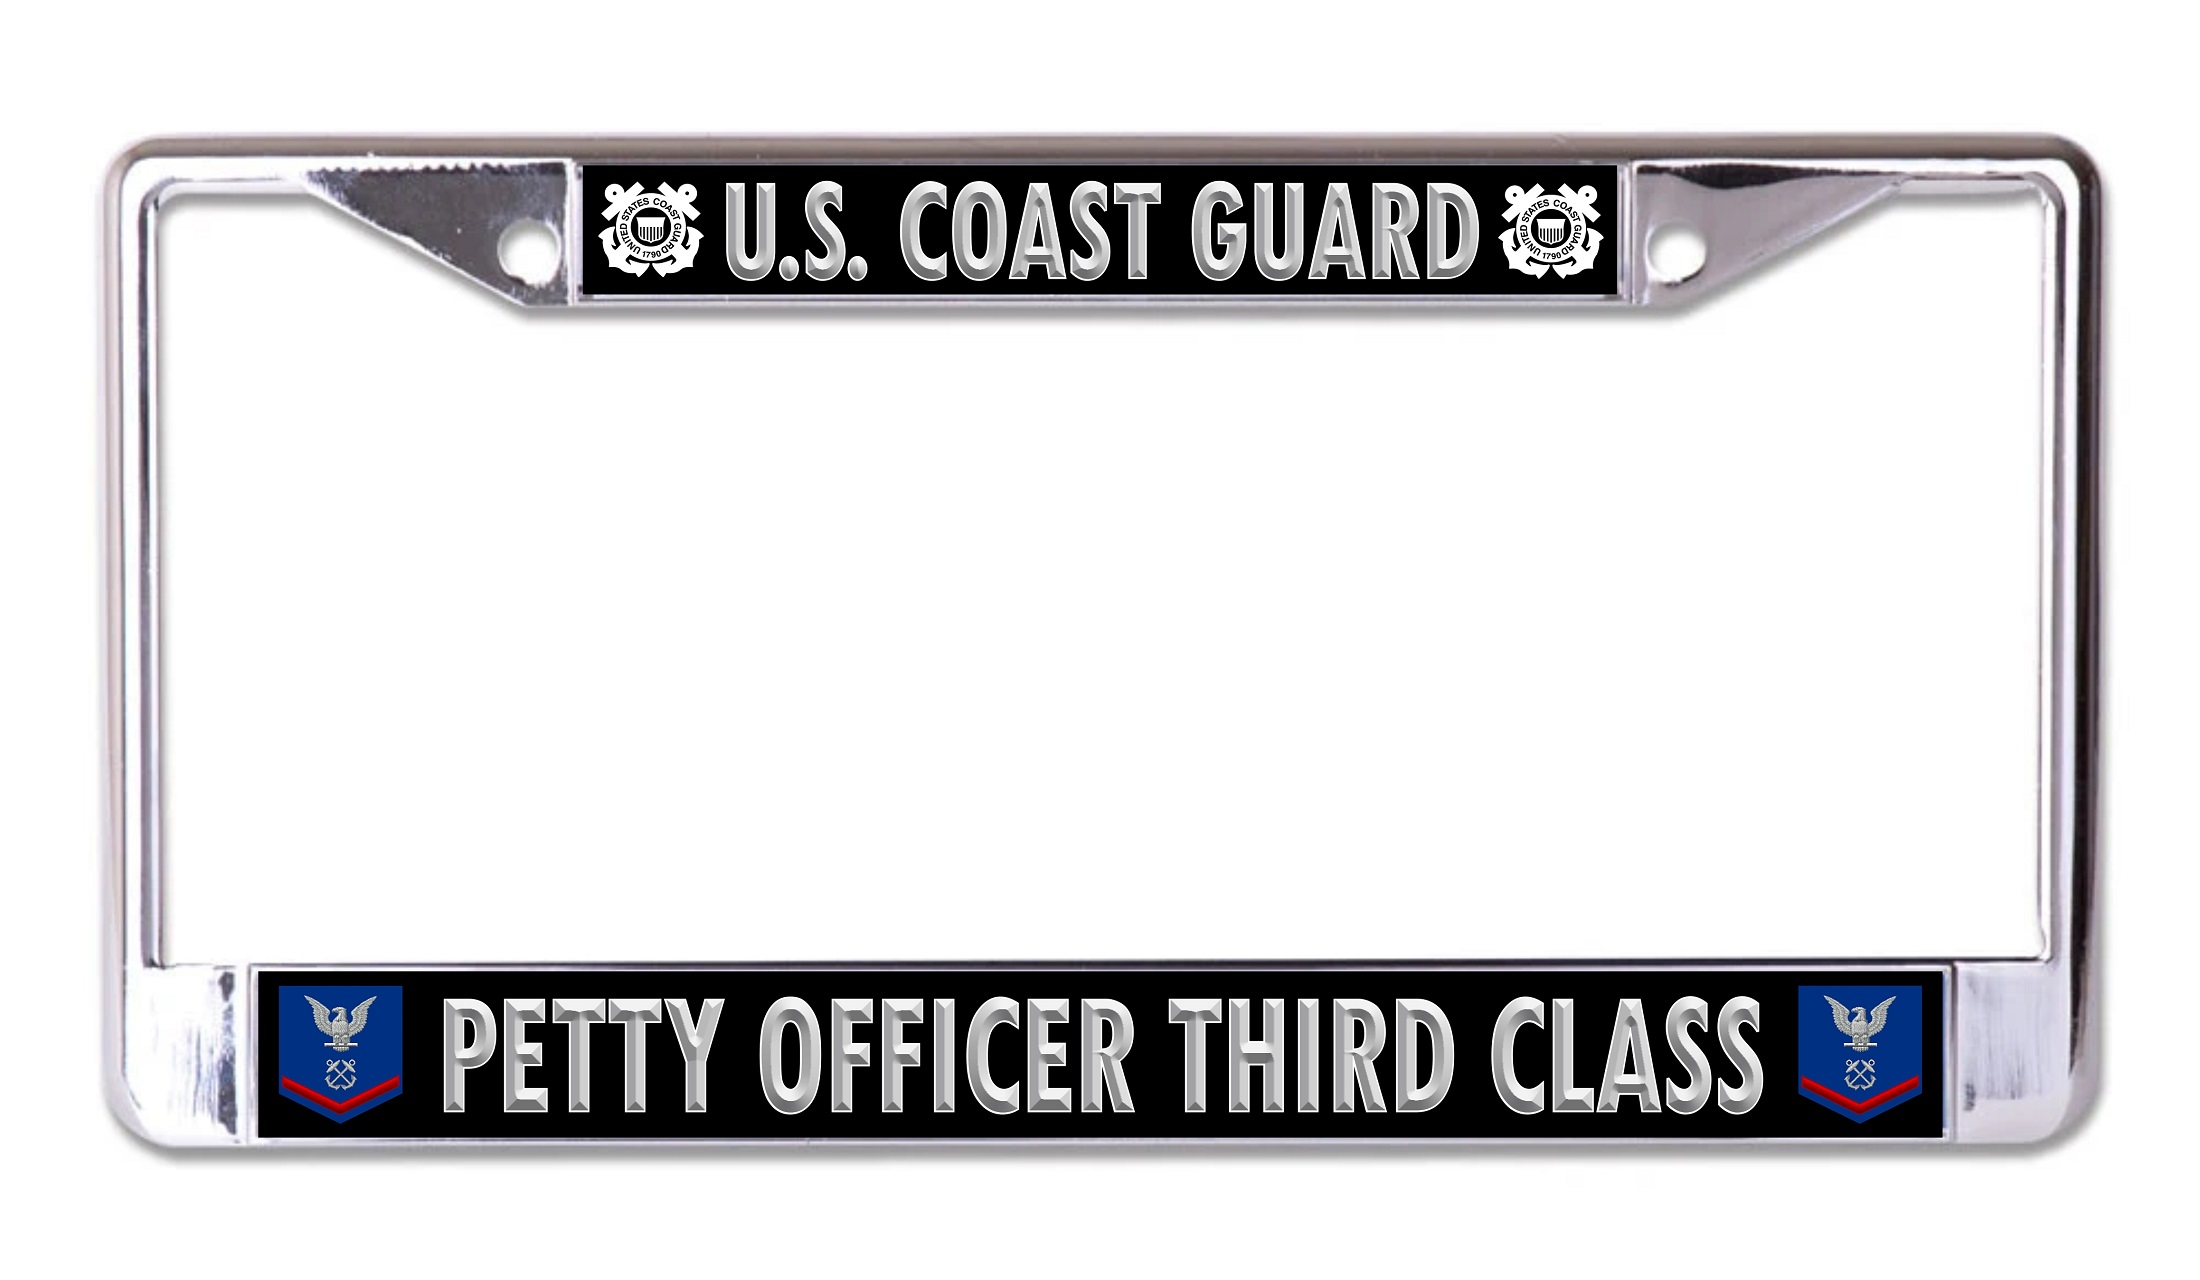 U.S. Coast Guard Petty Officer Third Class Chrome LICENSE PLATE Frame